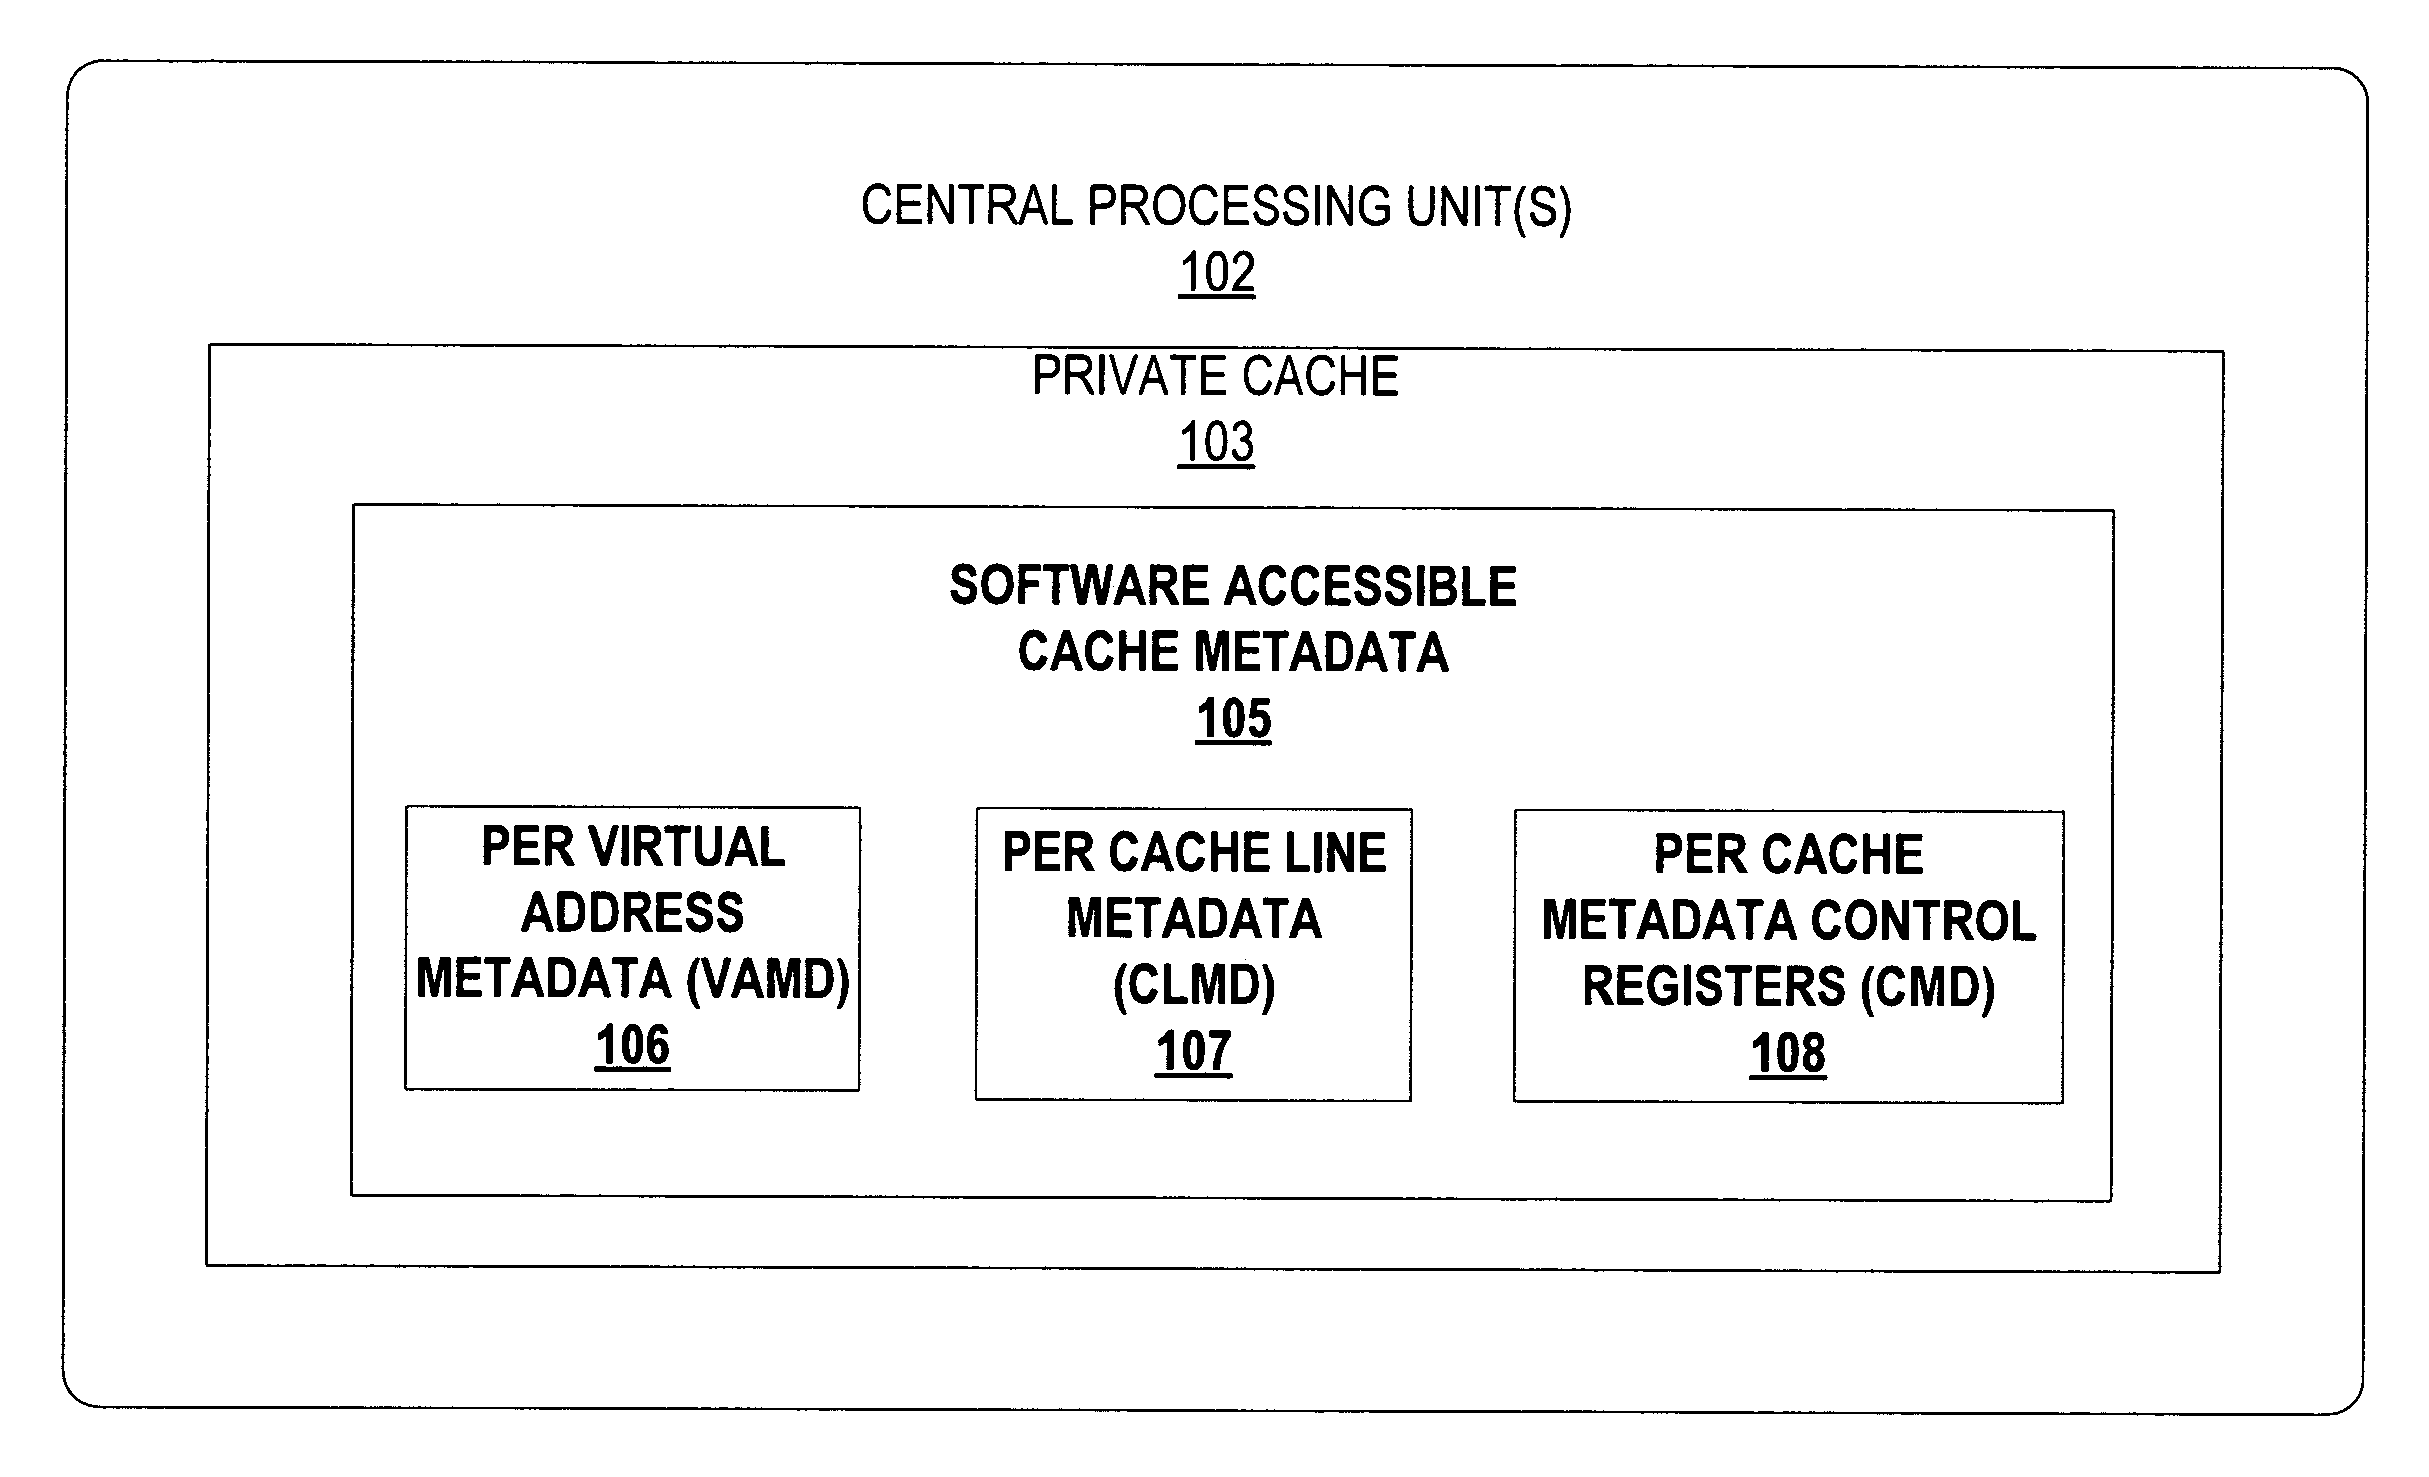 Software accessible cache metadata